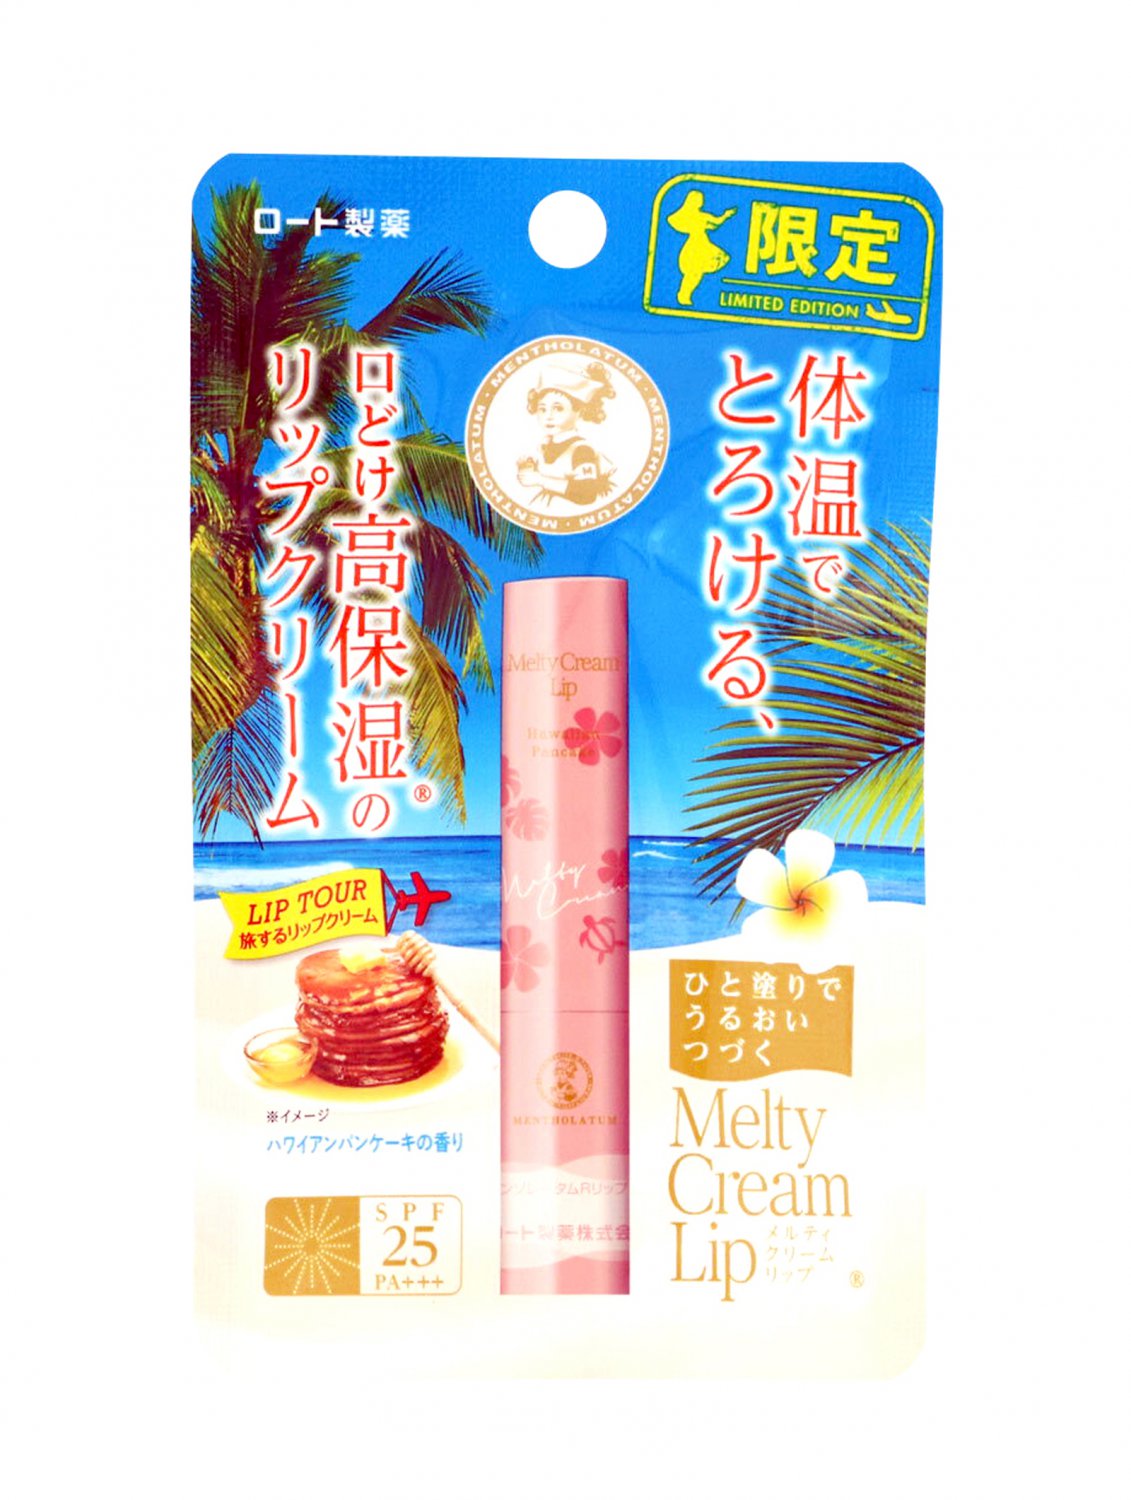 Rohto Mentholatum Melty Cream Lip Hawaiian Pancake Extra Moisturizing Lip Balm SPF 25+++ 2.4g